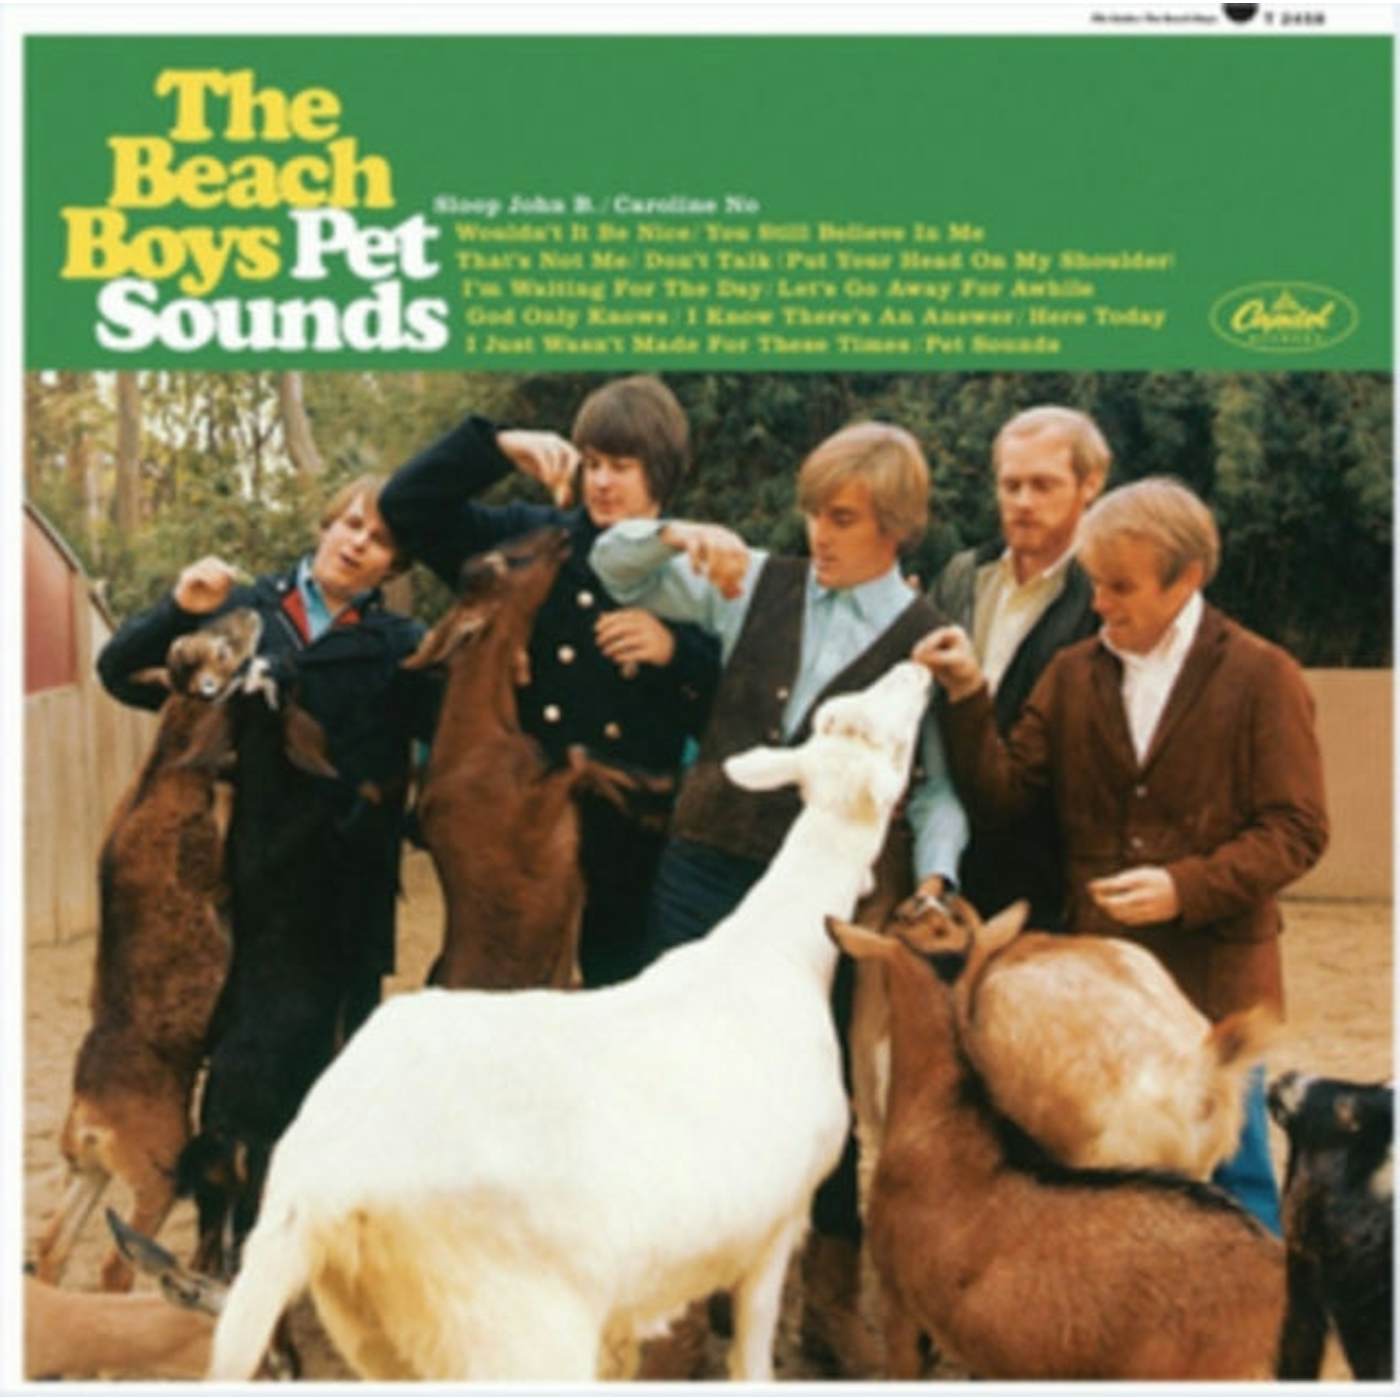 The Beach Boys LP - Pet Sounds (Stereo) (Vinyl)